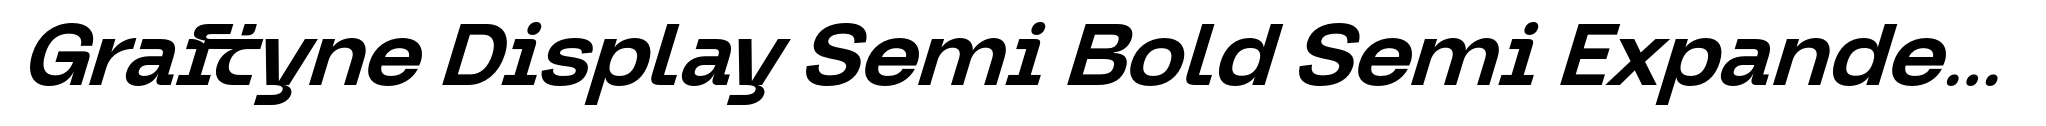 Graftyne Display Semi Bold Semi Expanded Italic image